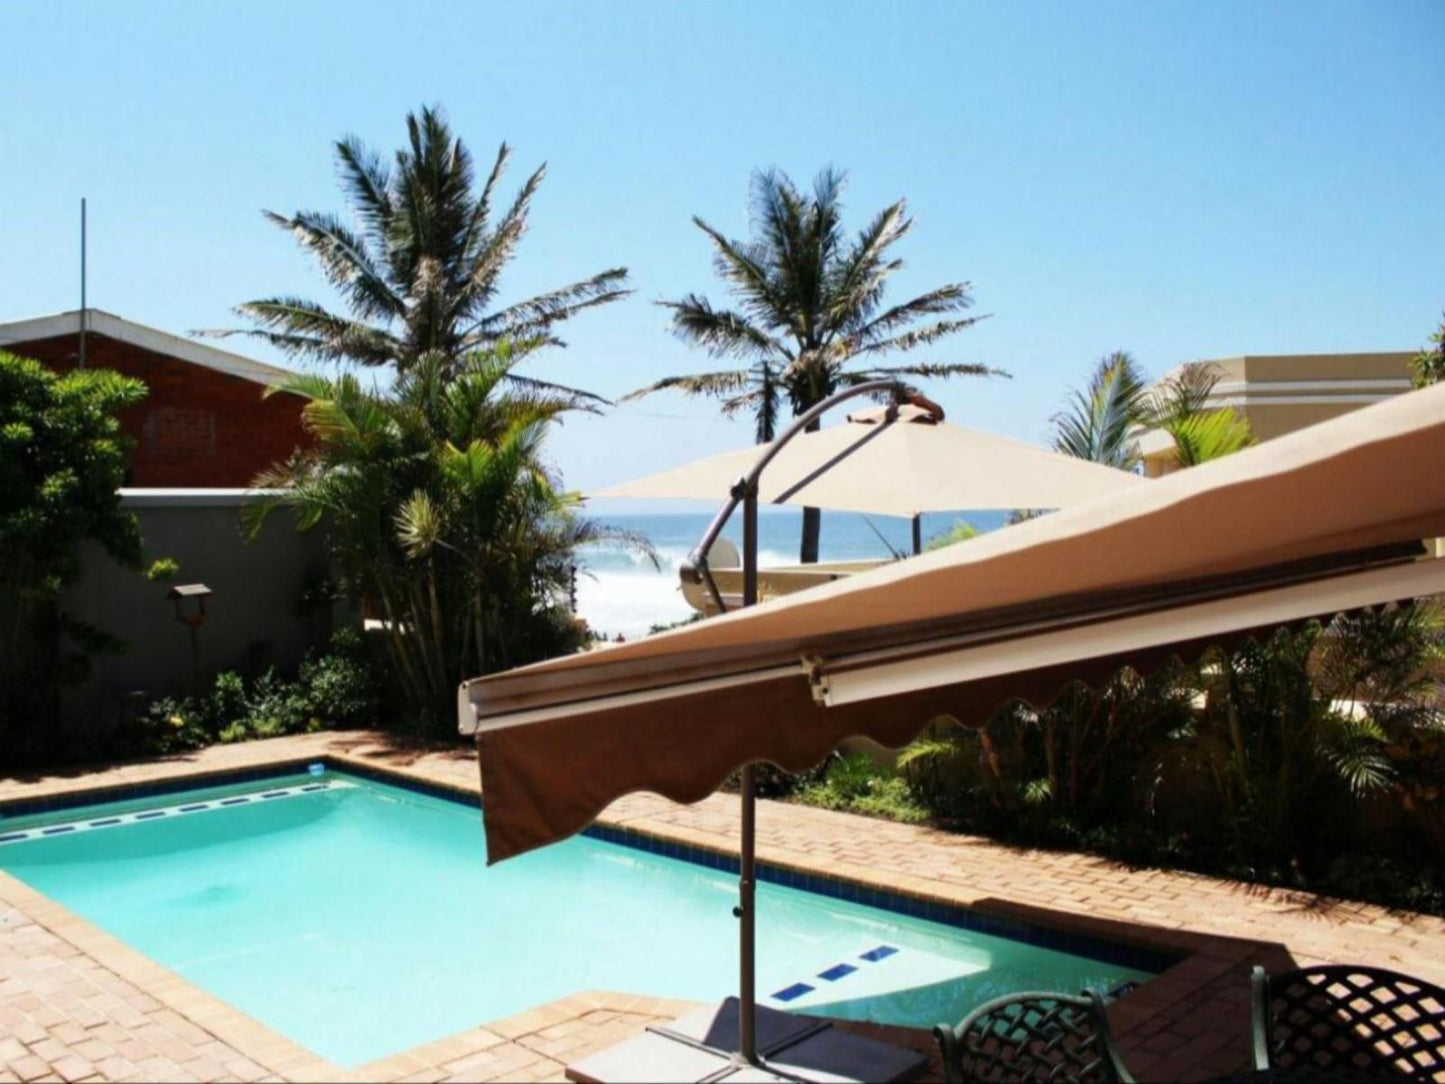 At Dom S Bandb Zimbali Coastal Estate Ballito Kwazulu Natal South Africa Beach, Nature, Sand, Palm Tree, Plant, Wood, Swimming Pool